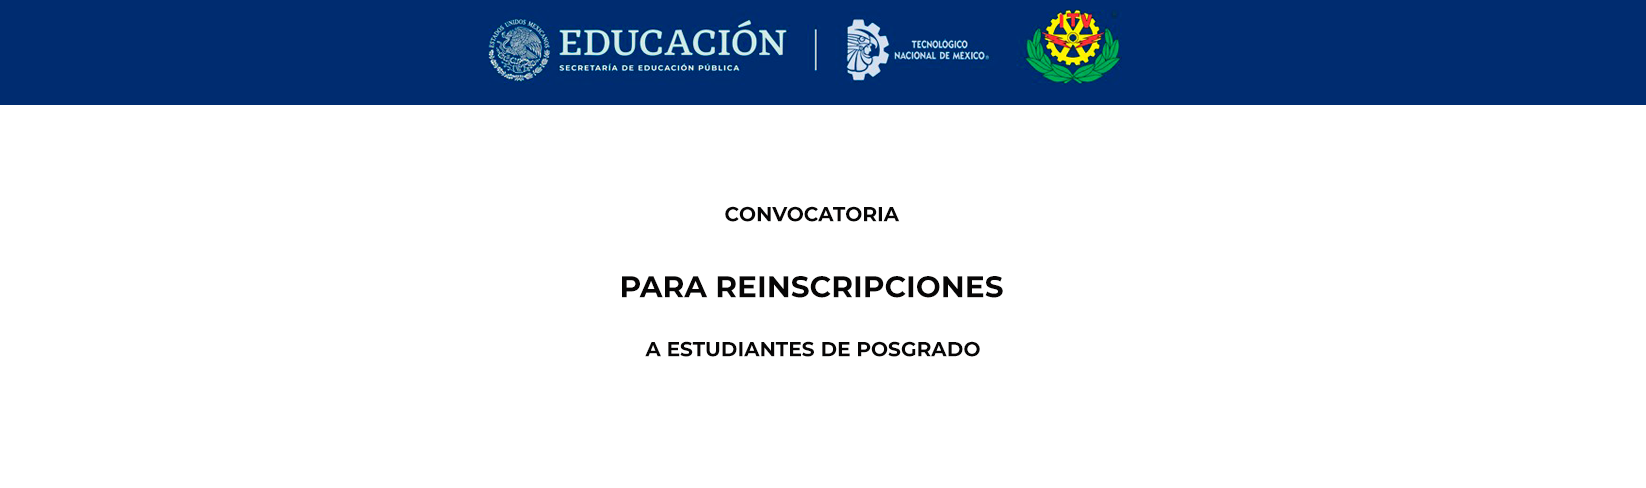 CONVOCATORIA PARA REINSCRIPCIONES A ESTUDIANTES DE POSGRADO